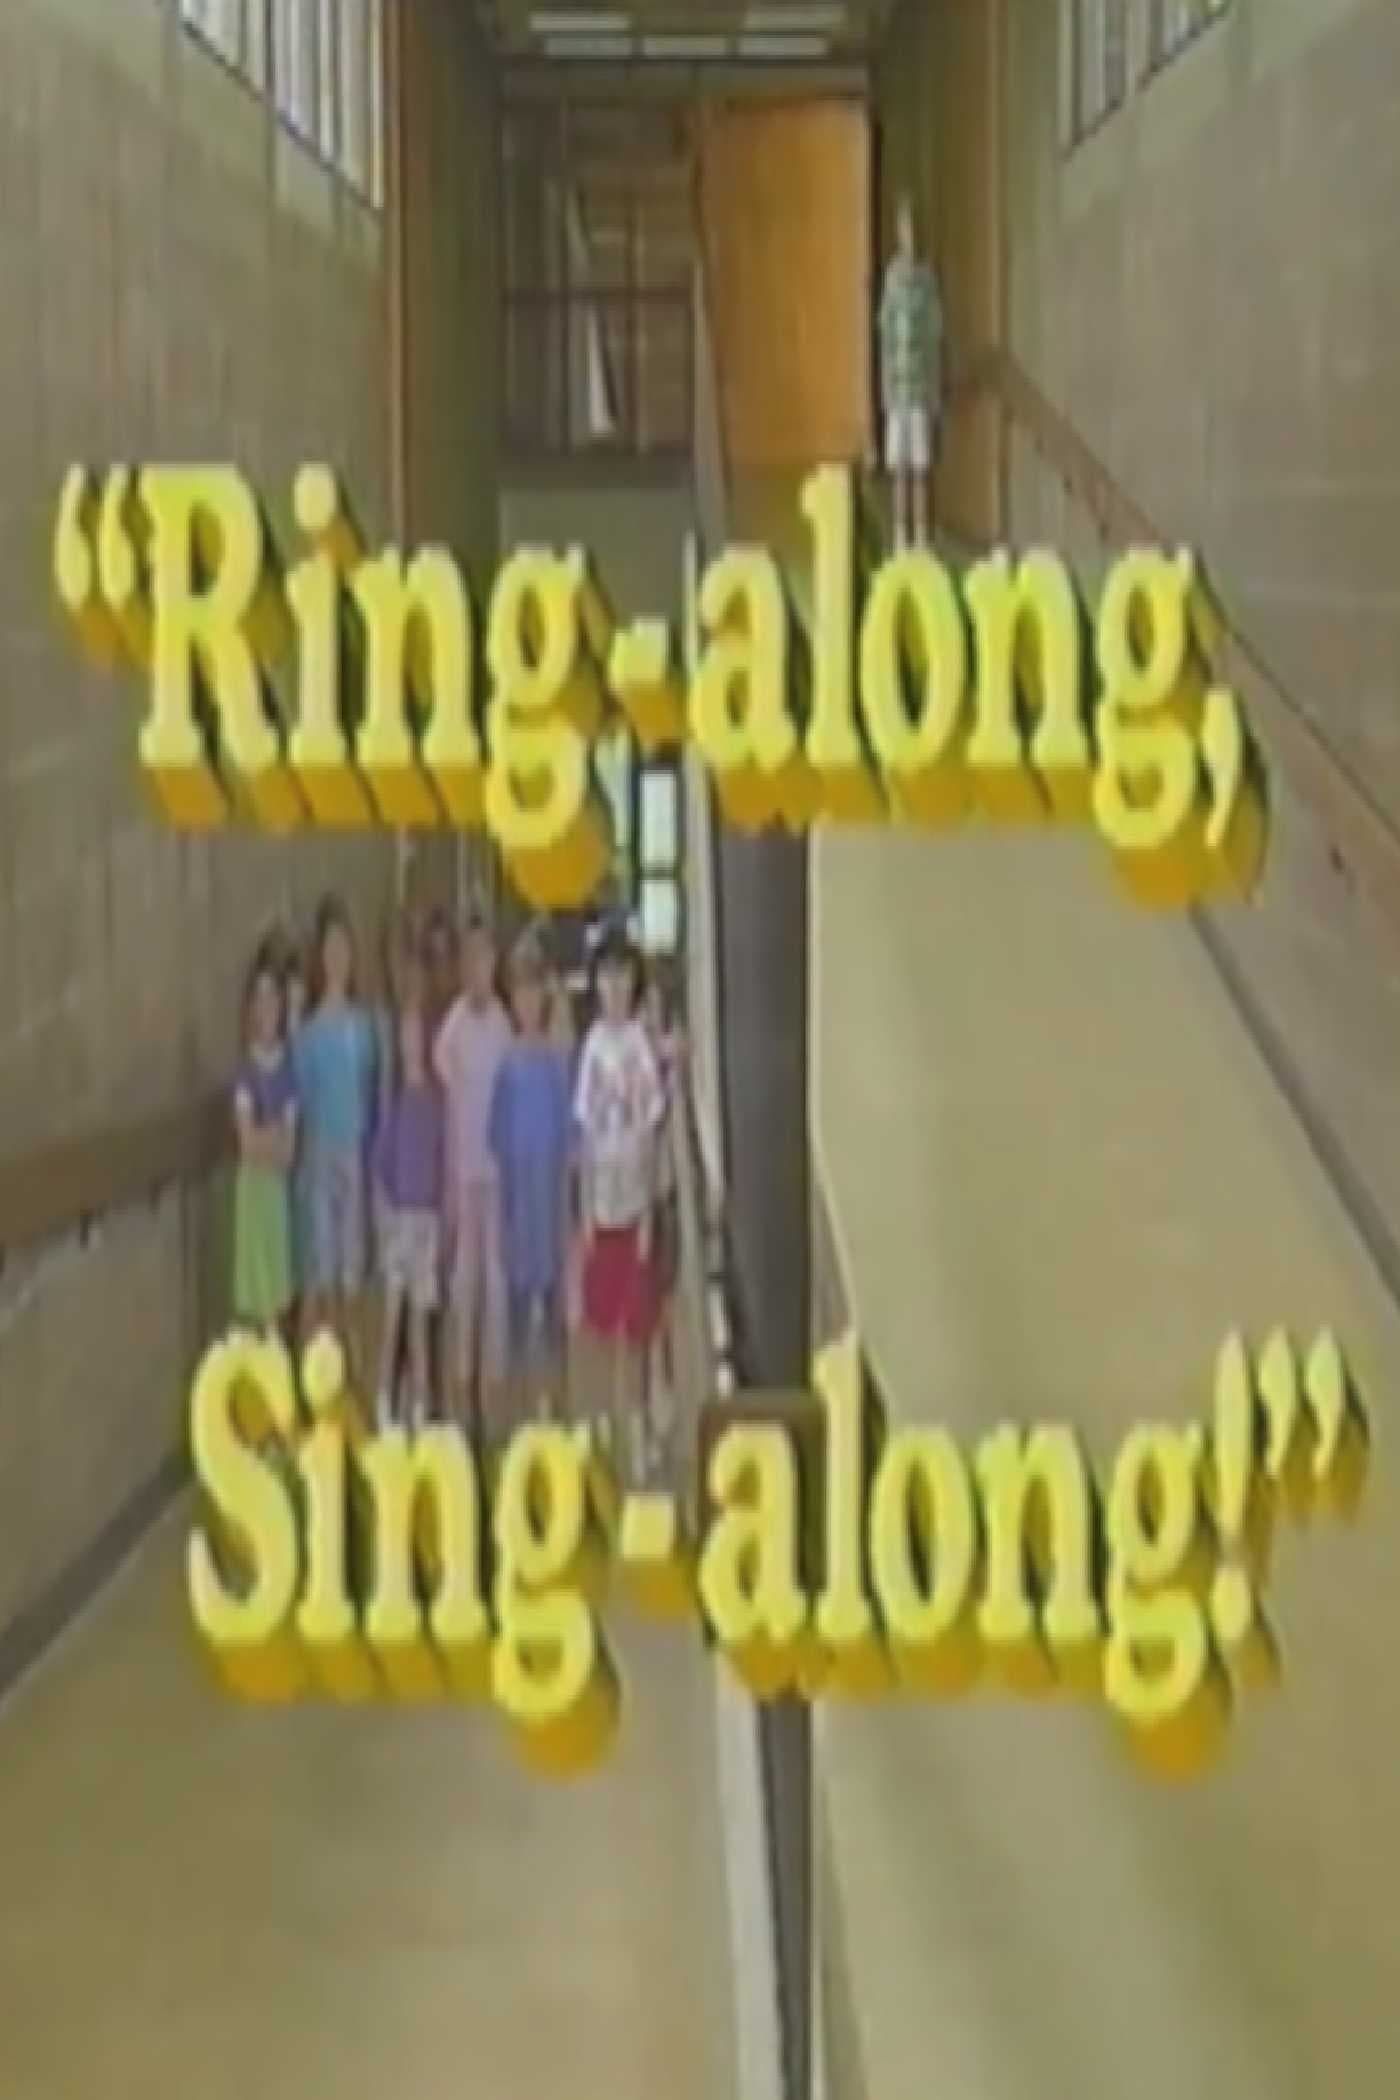 Ring-along Sing-along!